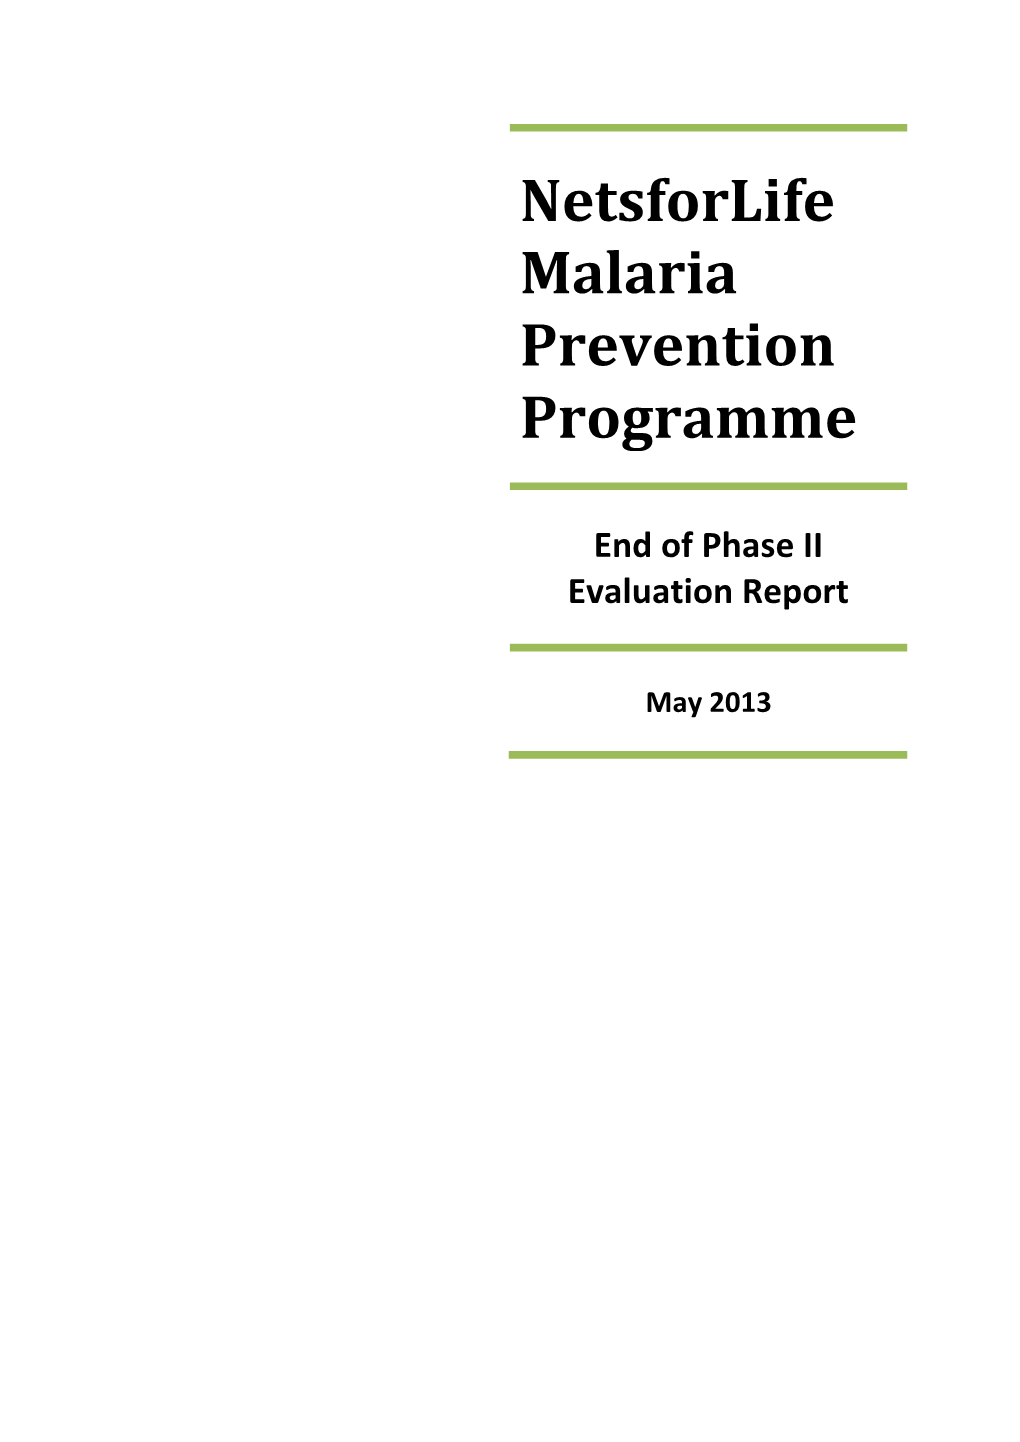 Netsforlife Malaria Prevention Programme